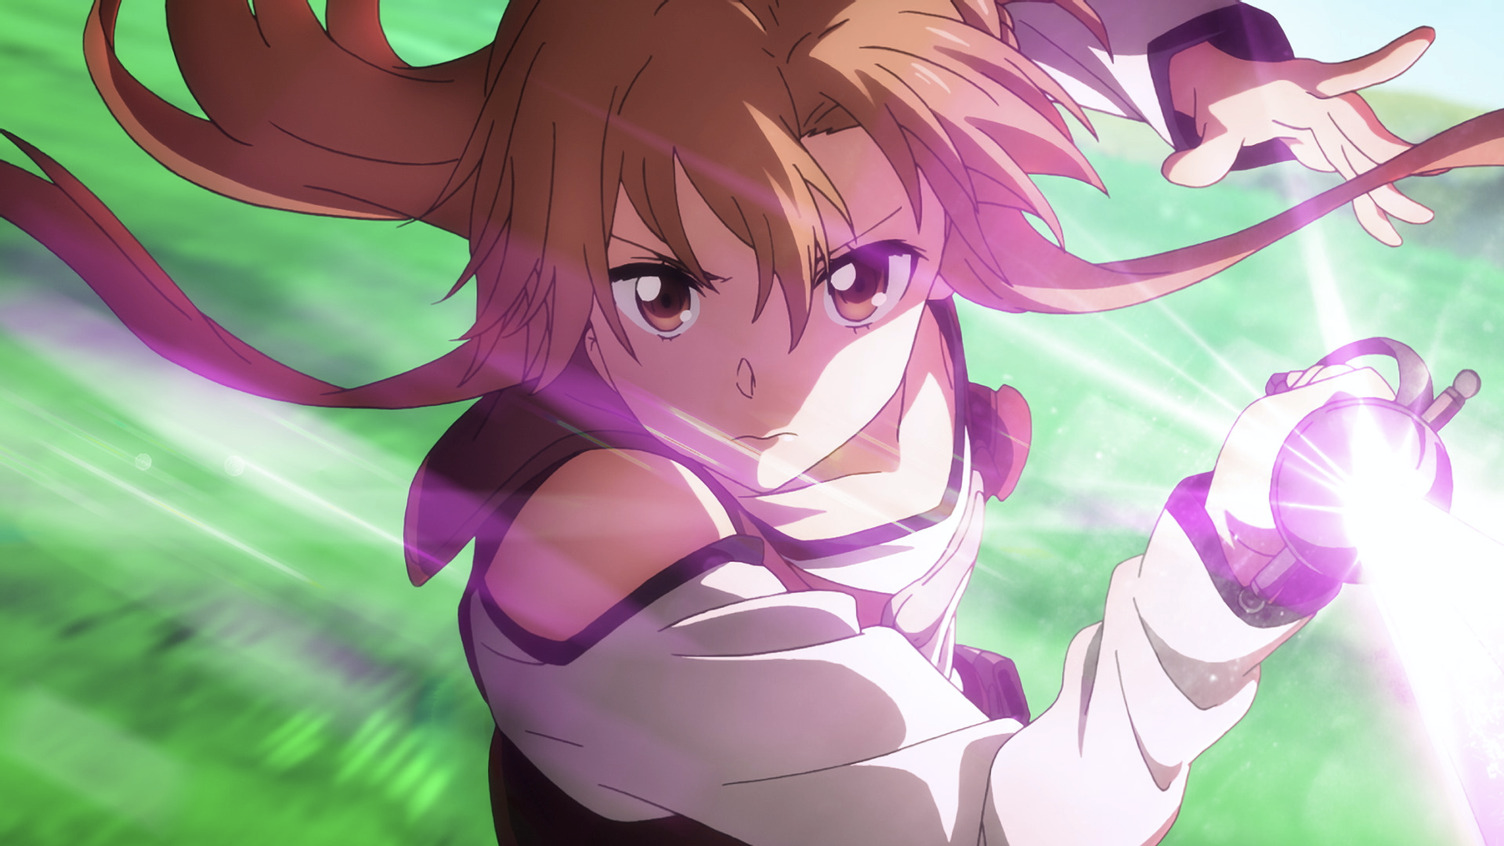 Sword Art Online: Alicization Part 1 Review • Anime UK News